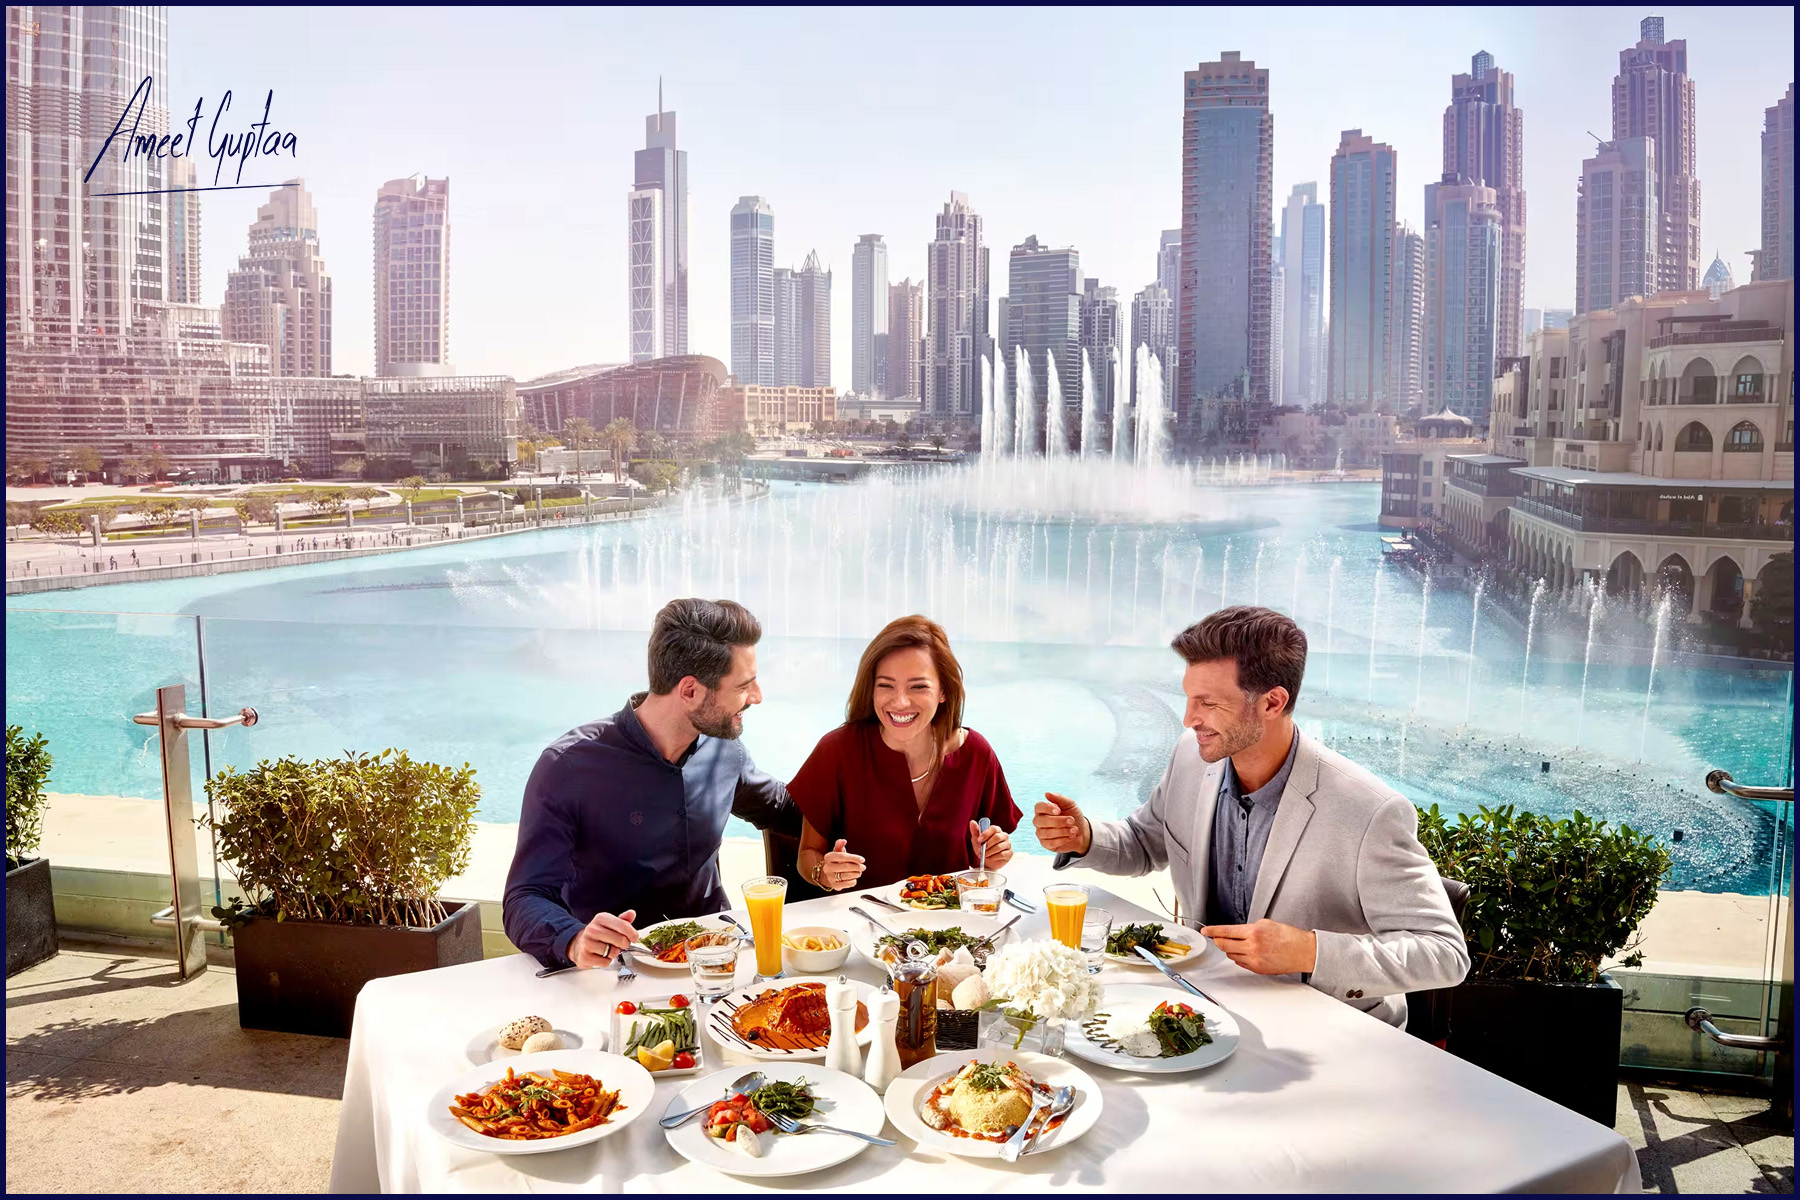 10-Marketing-Tips-to-Boost-Your-Restaurant-Business-in-Dubai-Ameet-Guptaa